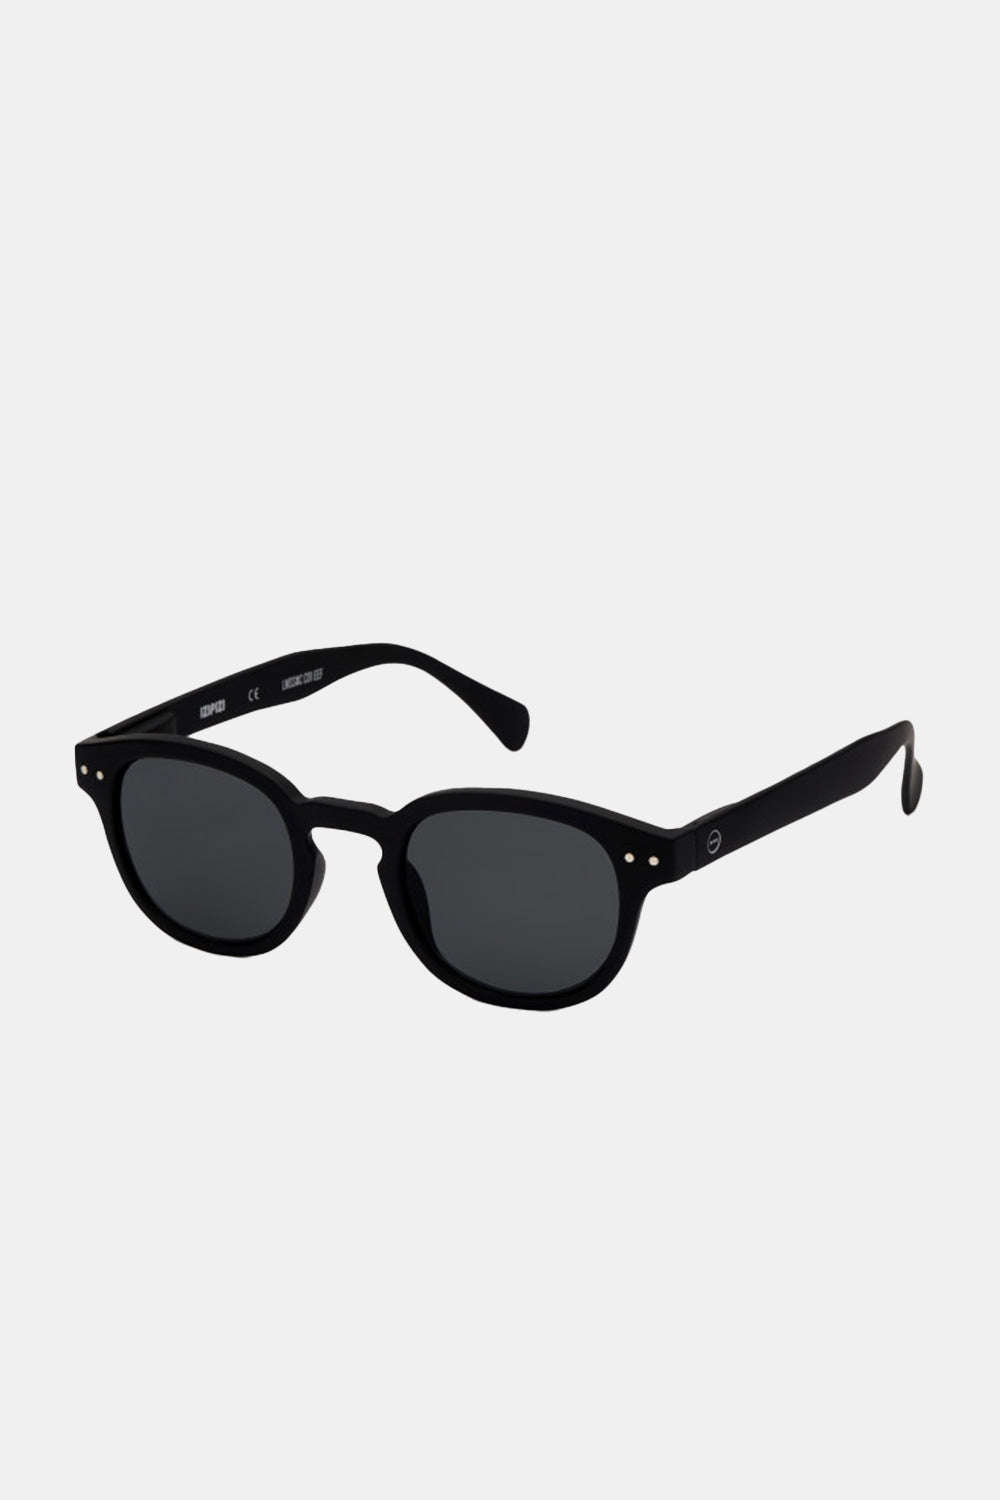 IZIPIZI #C Sunglasses (Black)